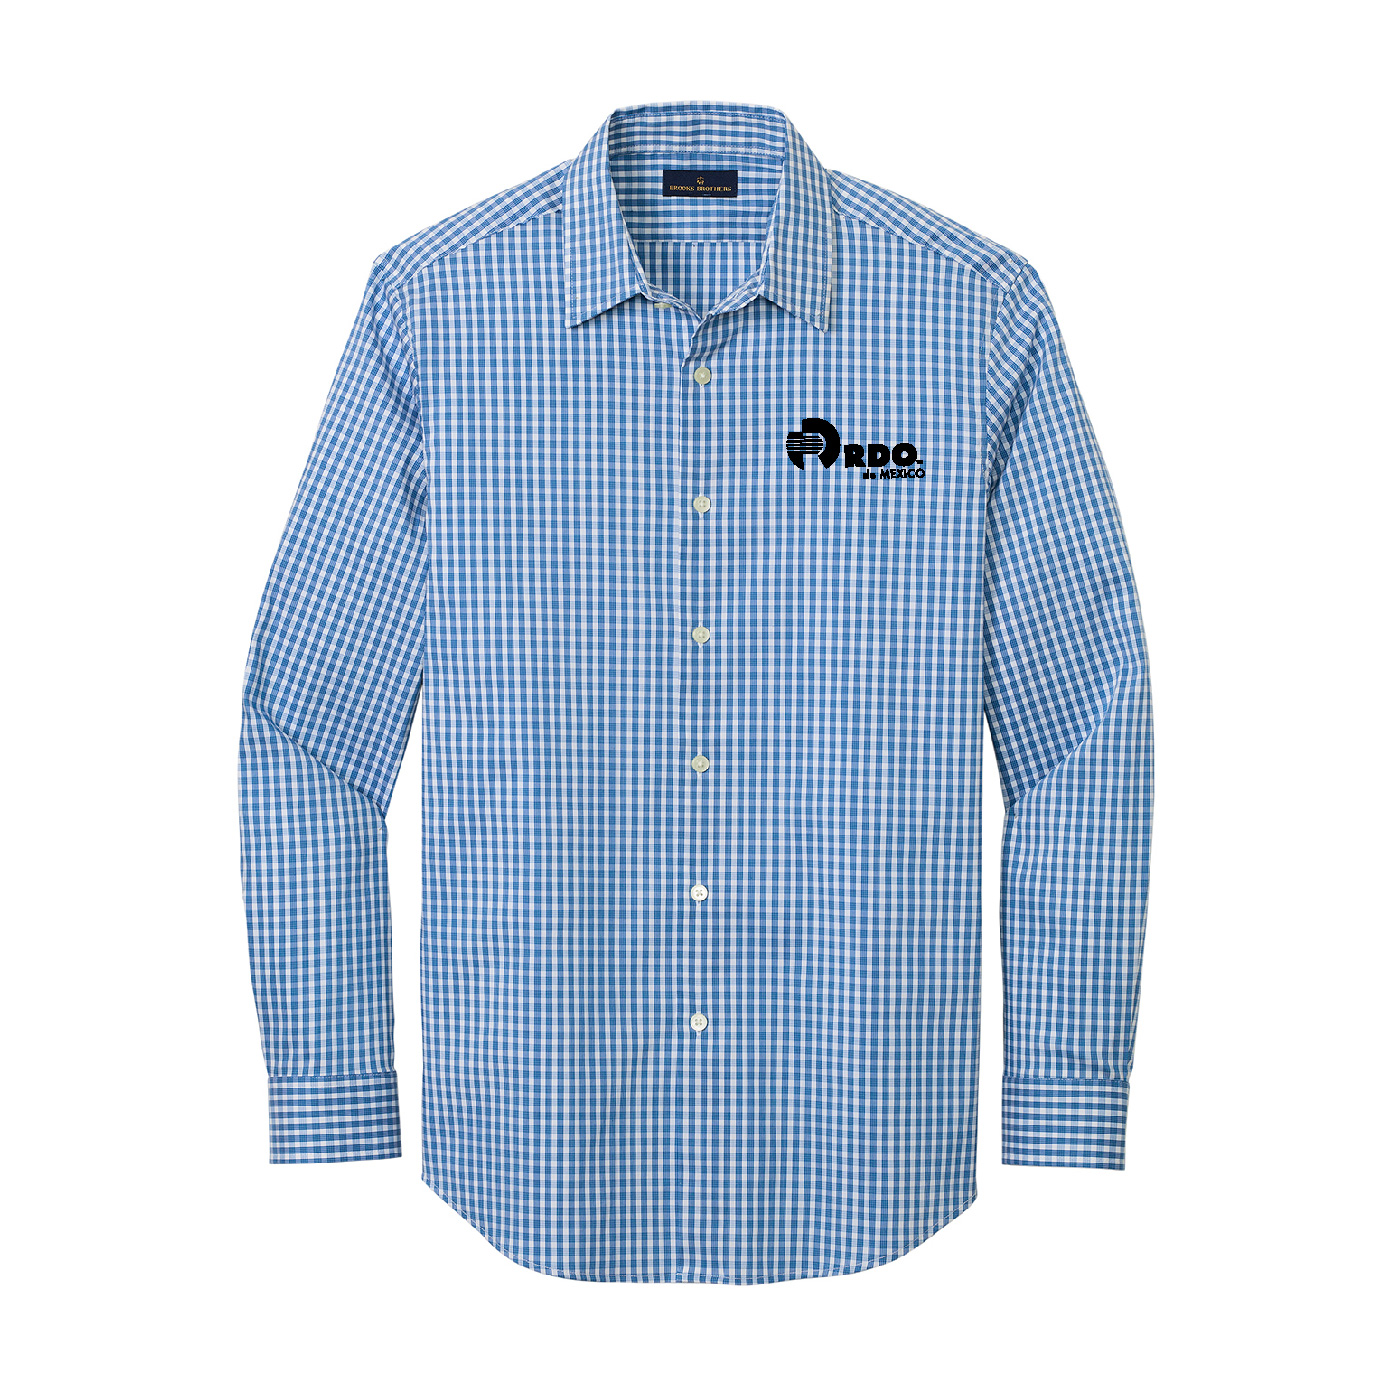 Brooks Brothers Tech Stretch Patterned Shirt